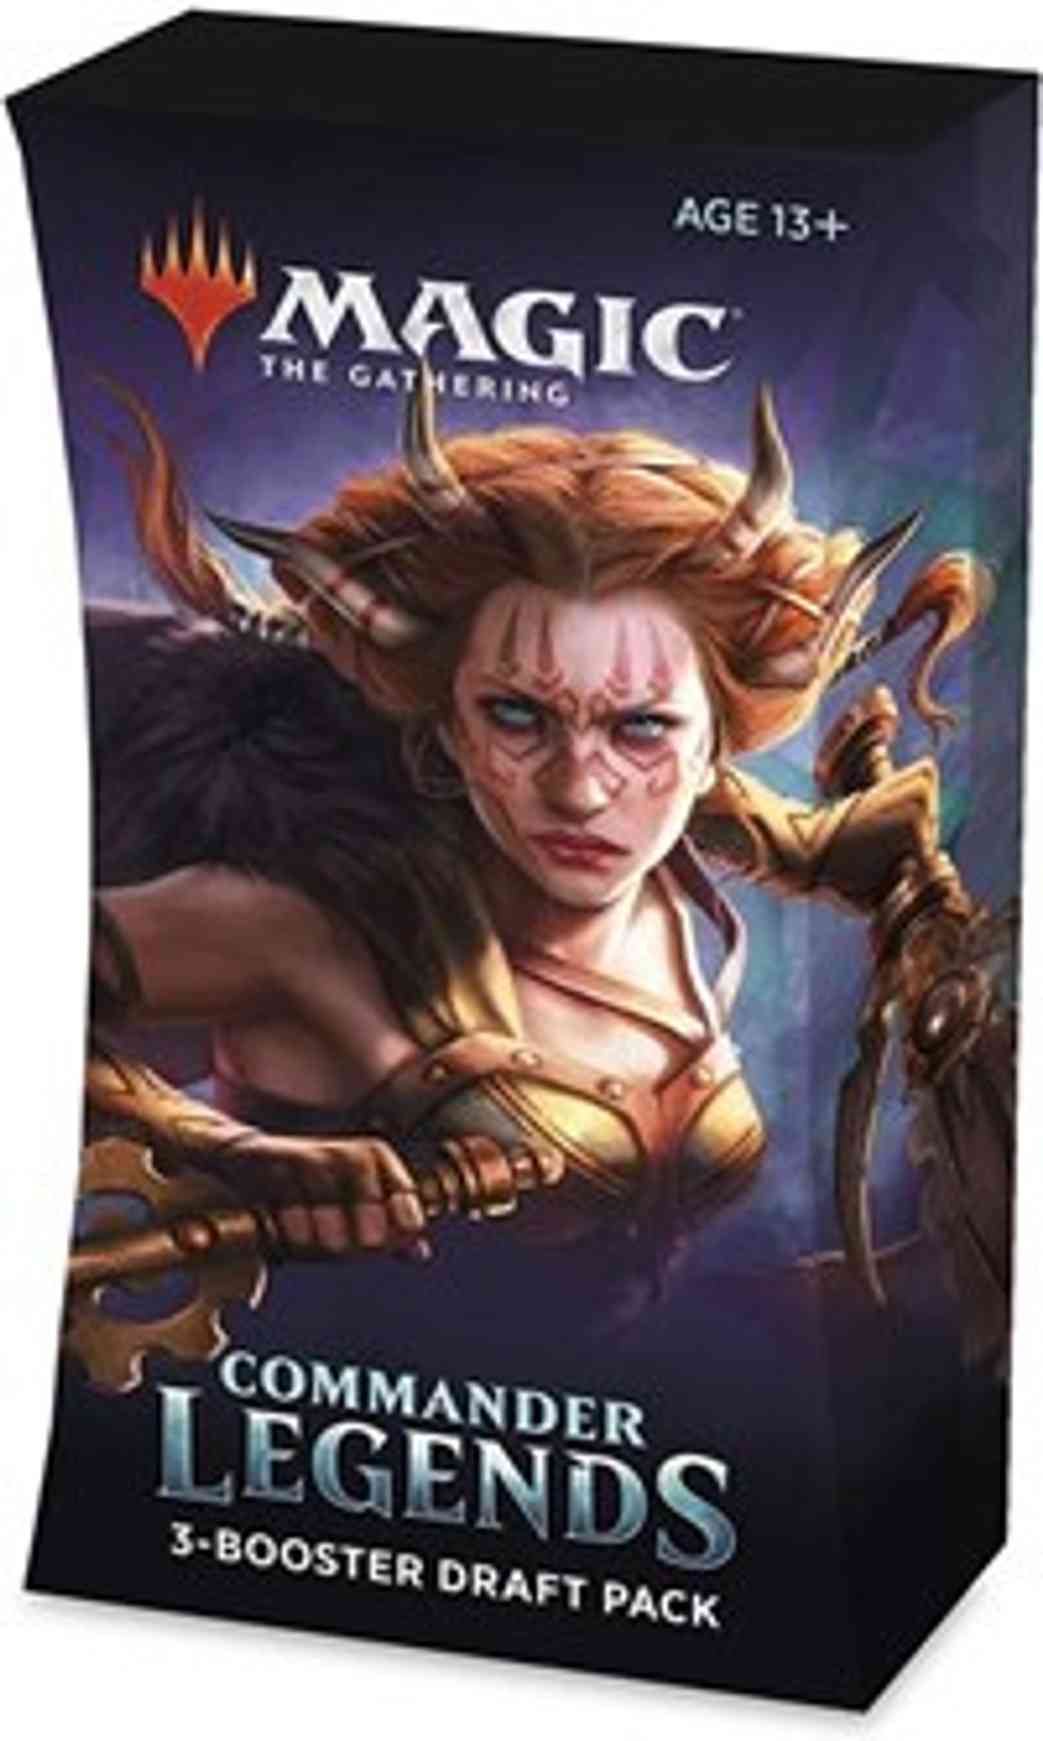 Commander Legends - 3-Booster Draft Pack magic card front